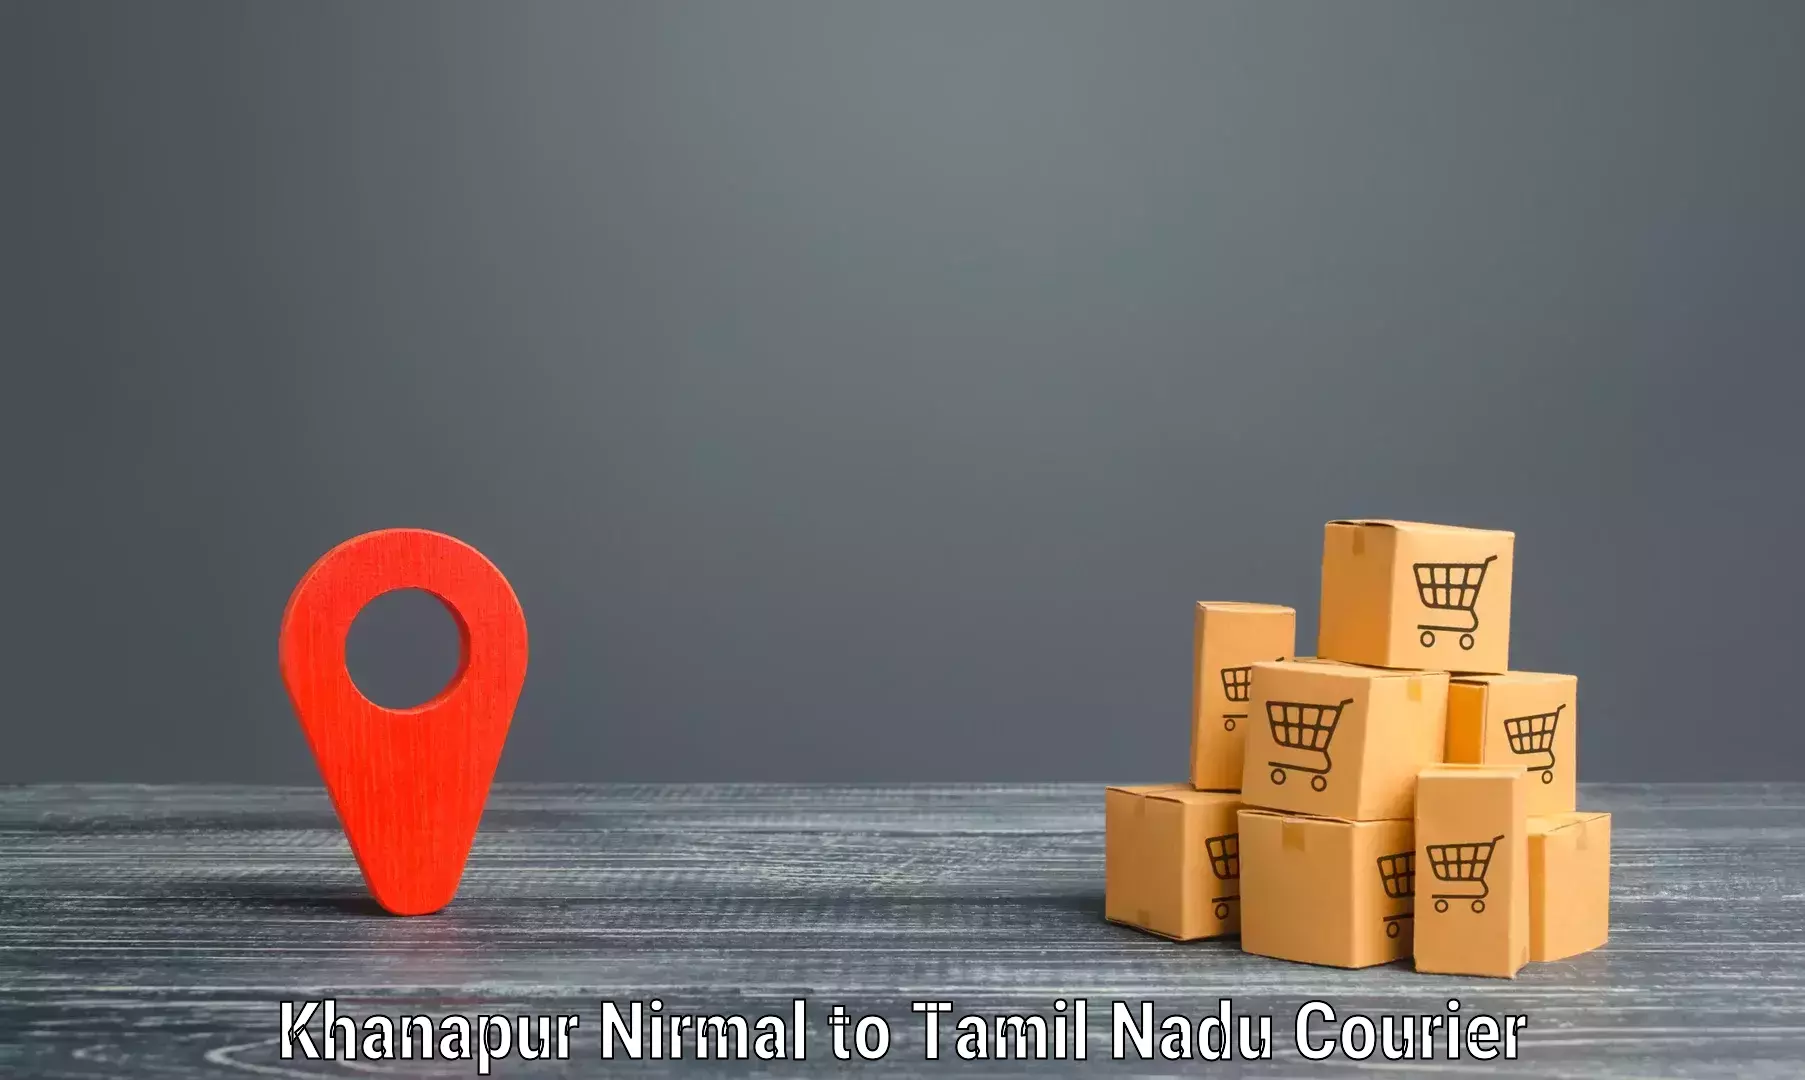 Courier service partnerships Khanapur Nirmal to Tiruvallur